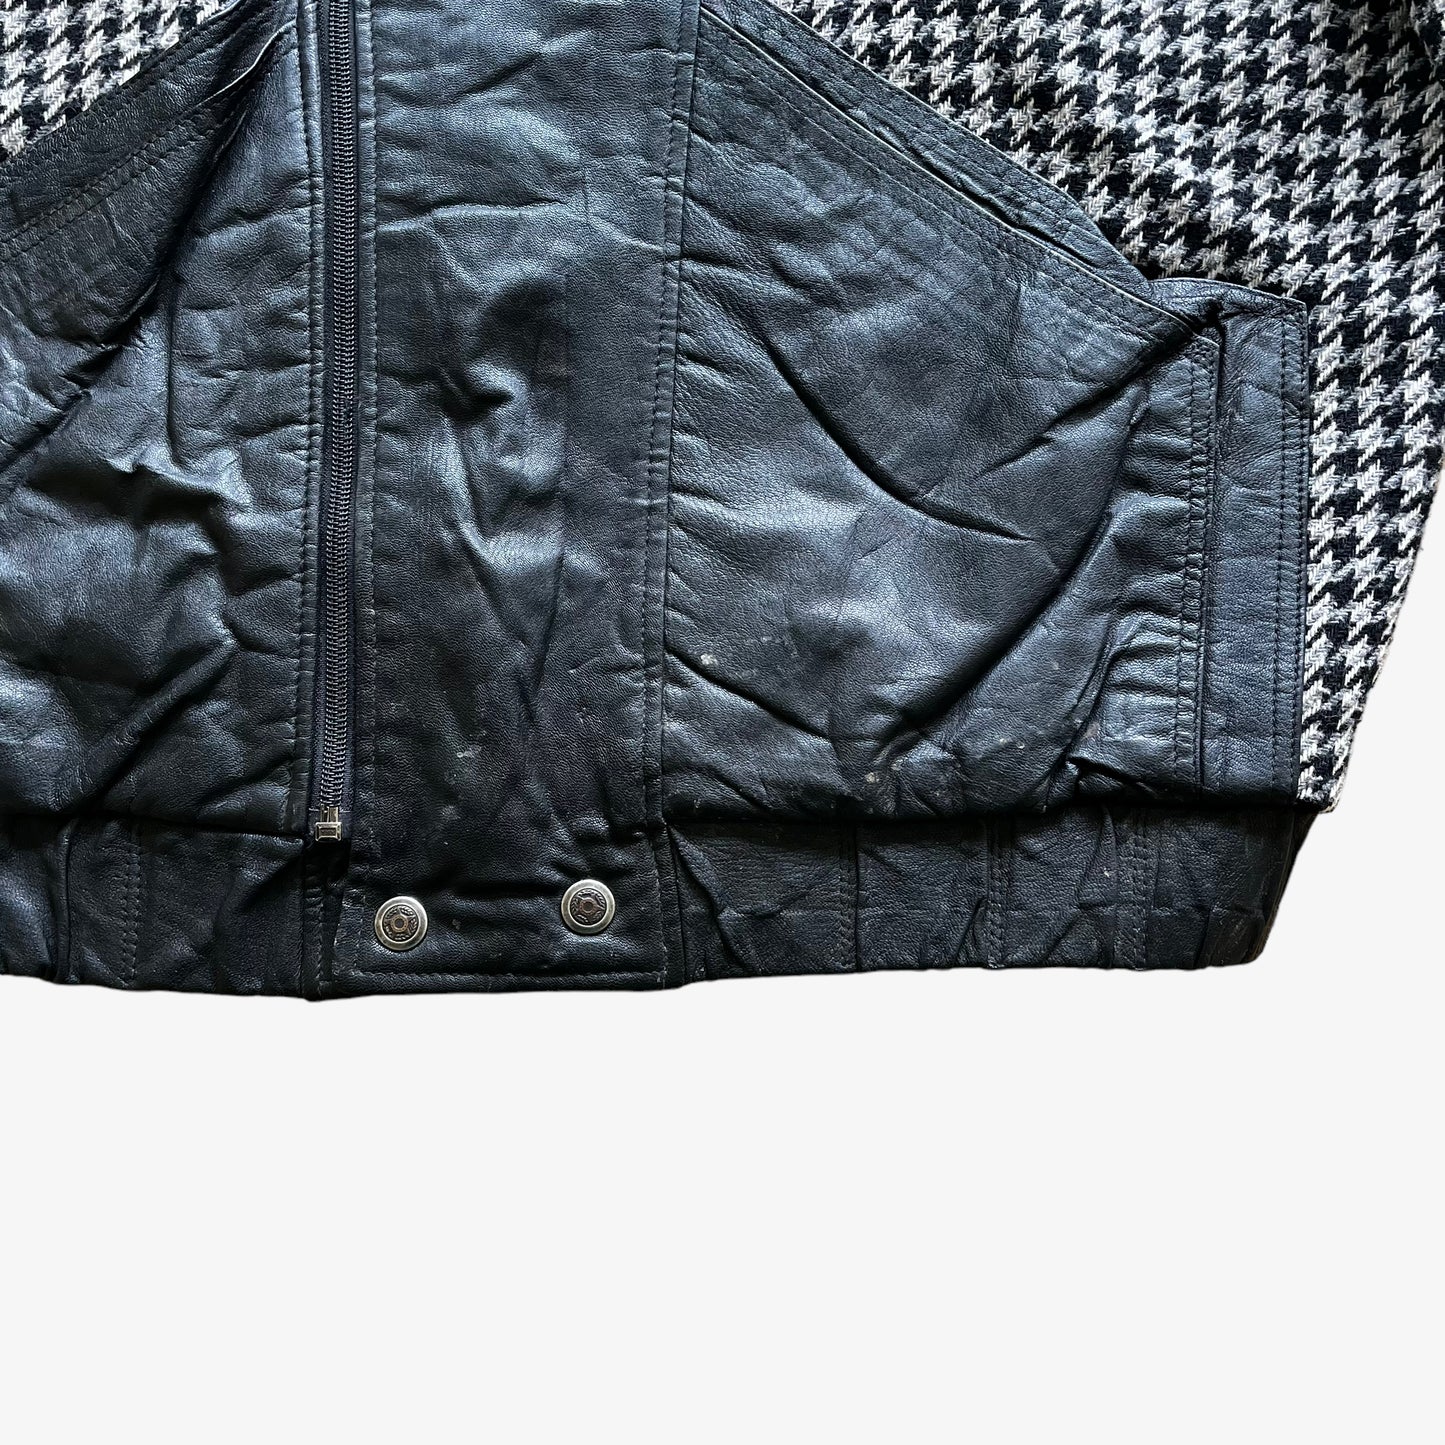 Bellucci Black & White Dogtooth Leather Blend Biker Jacket Button - Casspios Dream